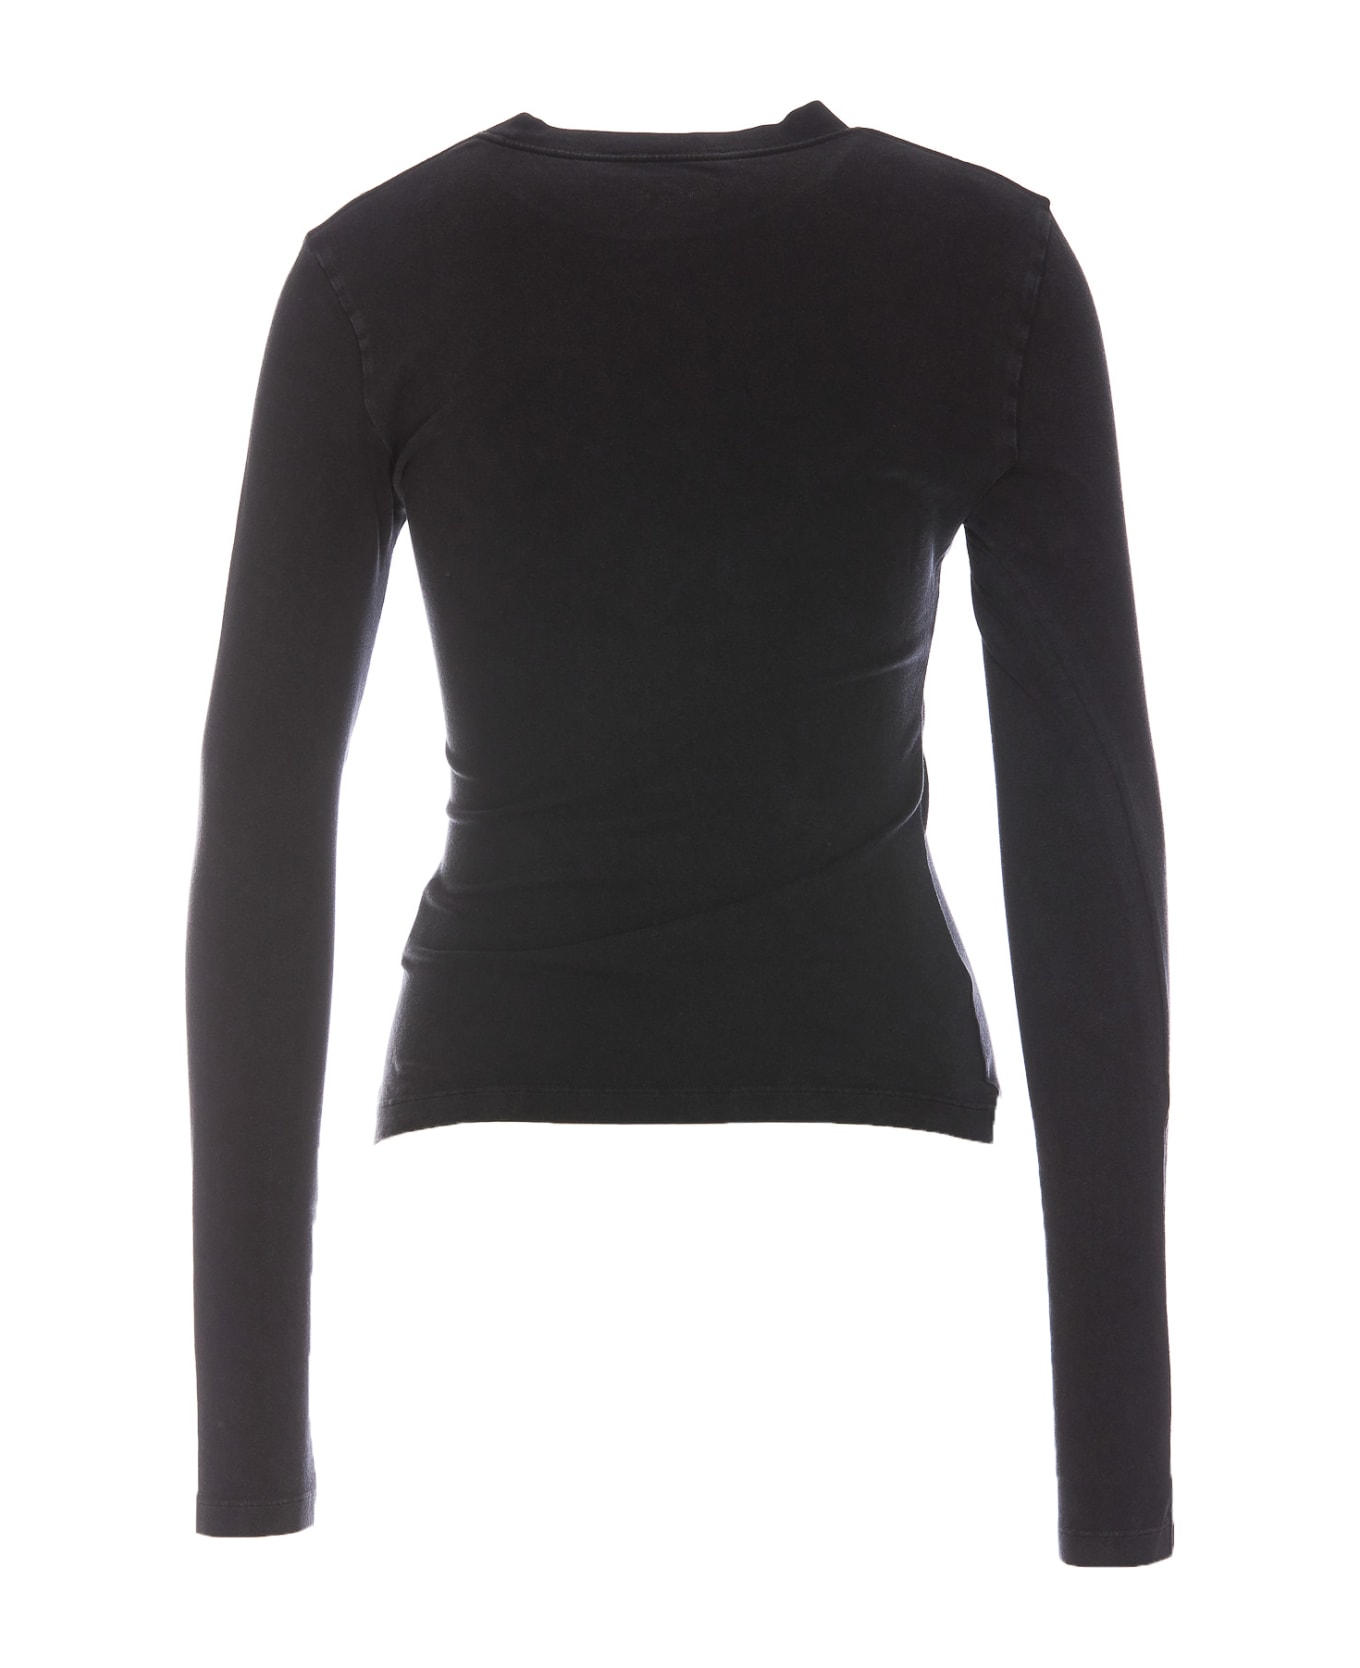 Versace Logo Print Sweater - Black